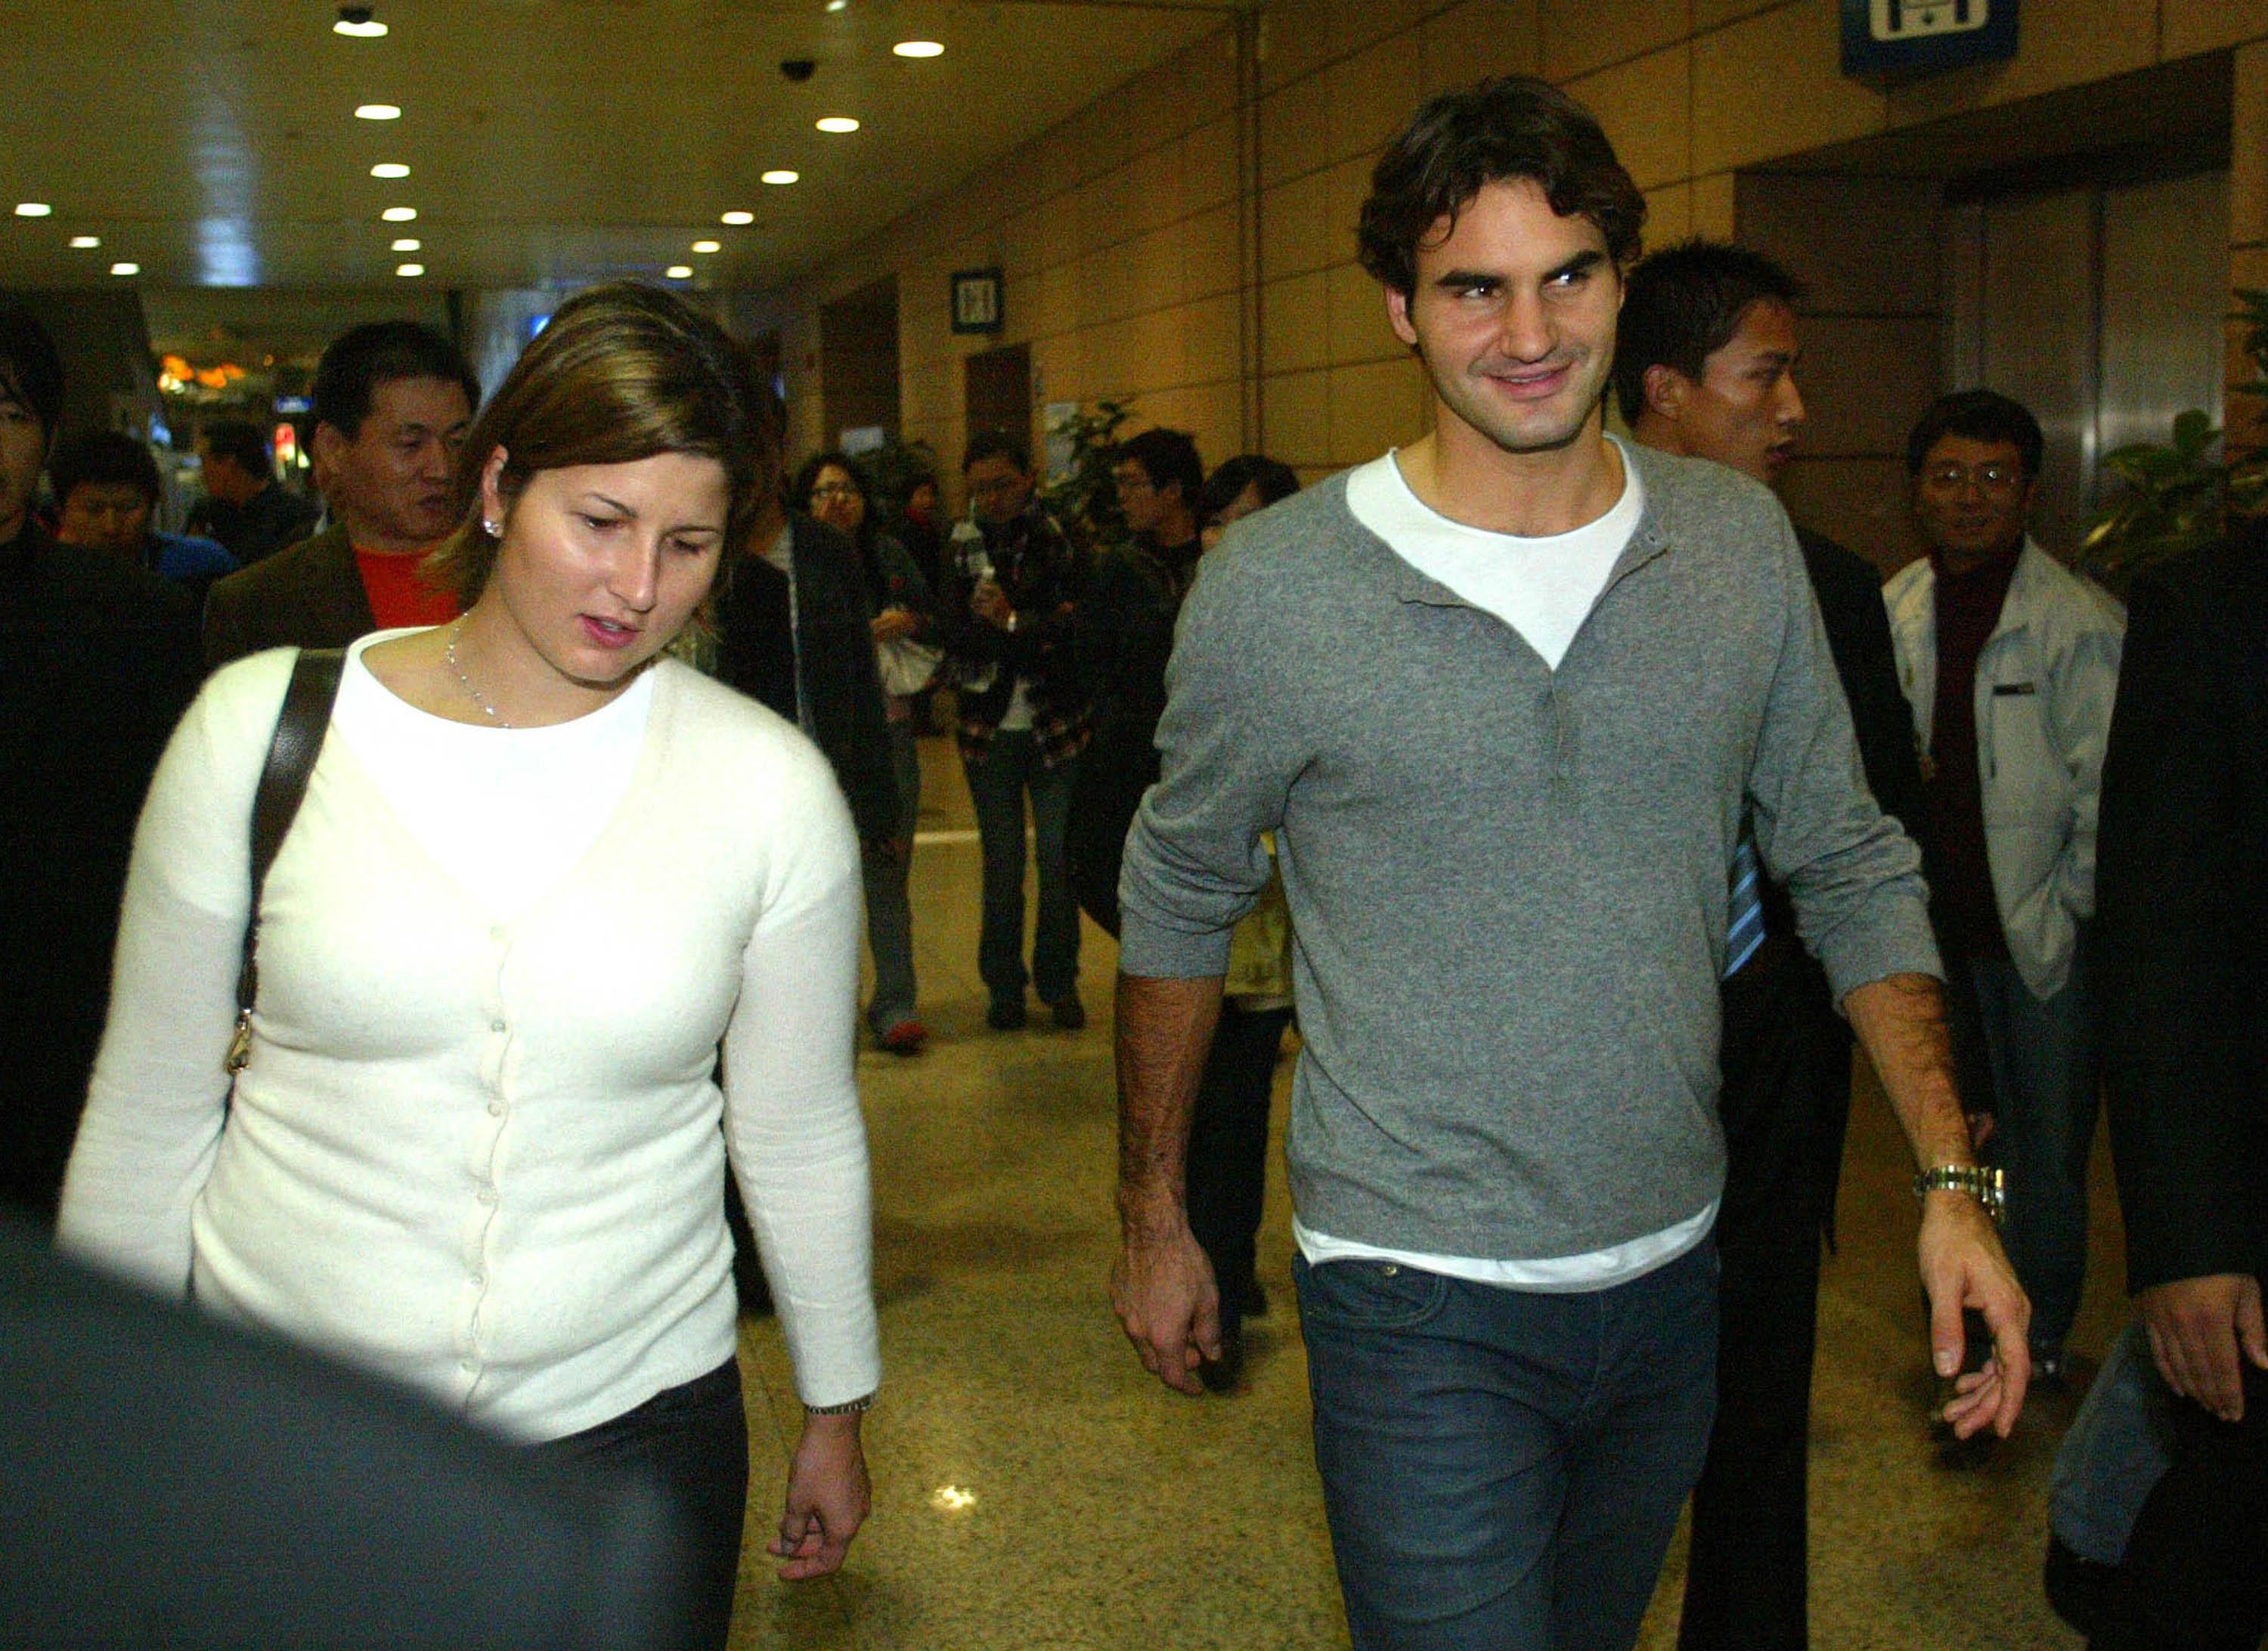 Deuces wild for tennis ace Roger Federer & wife Mirka | New York Gossip Gal | by Roz3000 x 2184